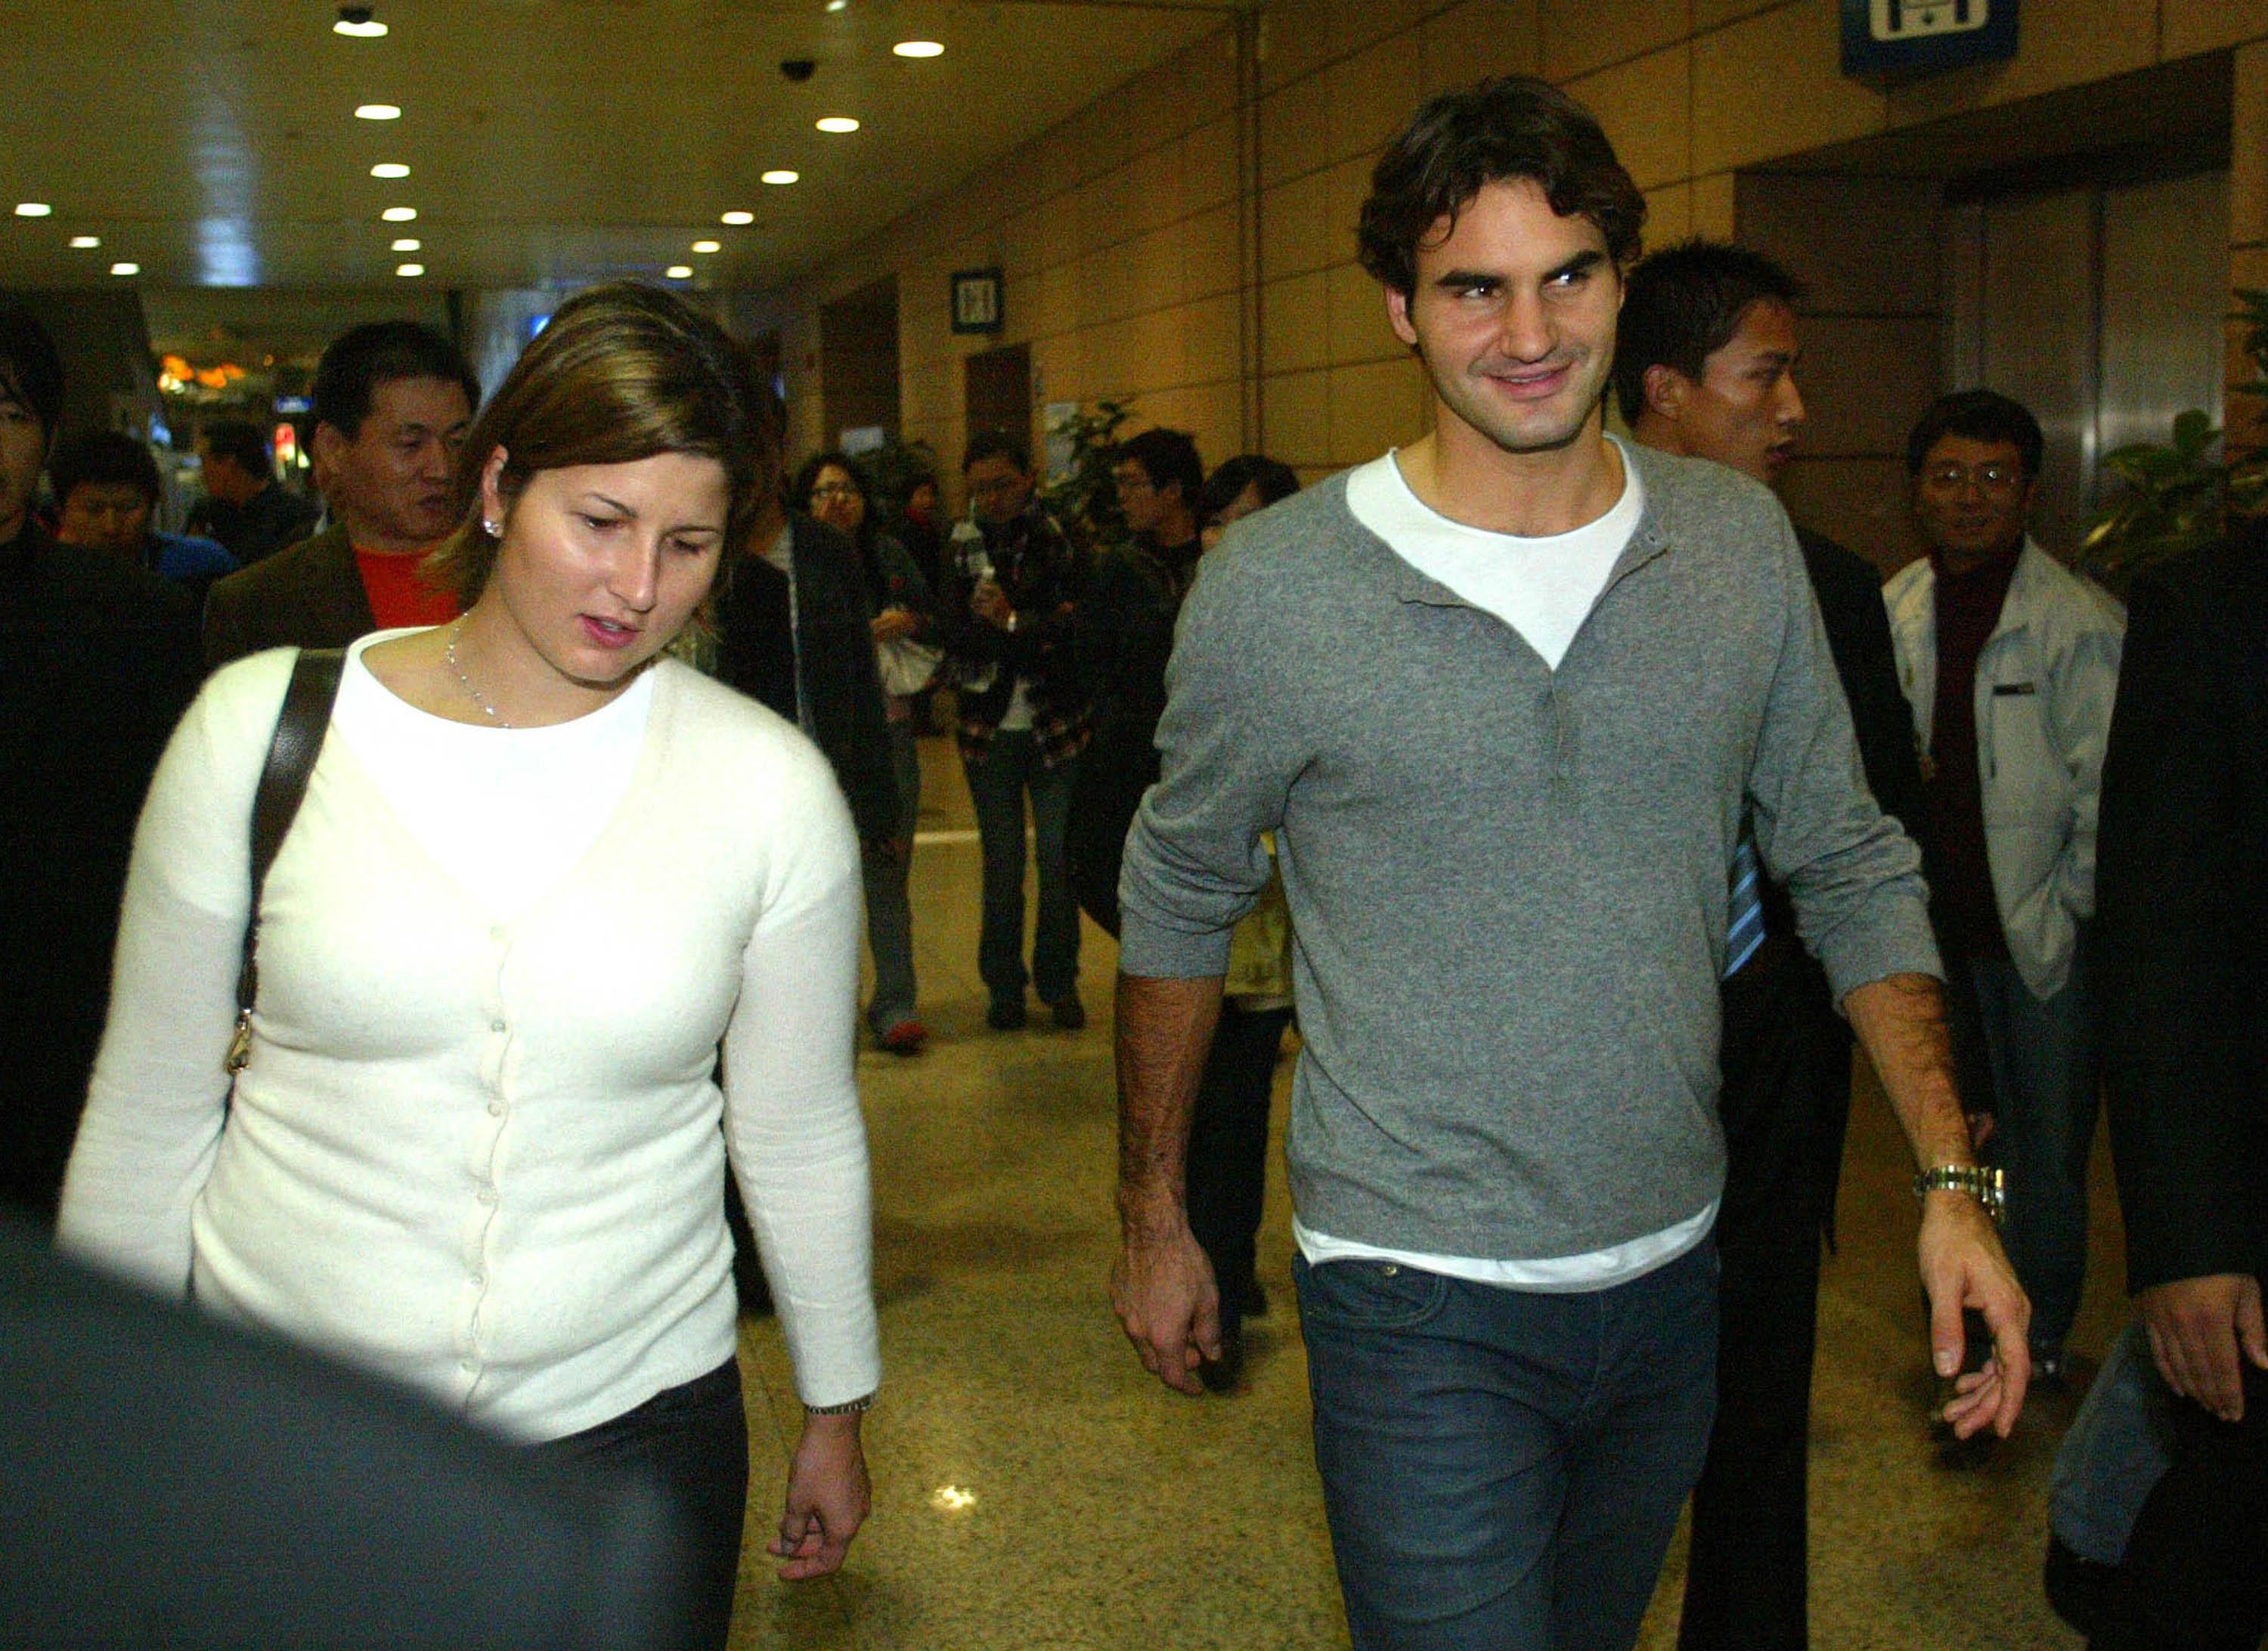 Deuces wild for tennis ace Roger Federer & wife Mirka | New York Gossip Gal | by Roz3000 x 2184